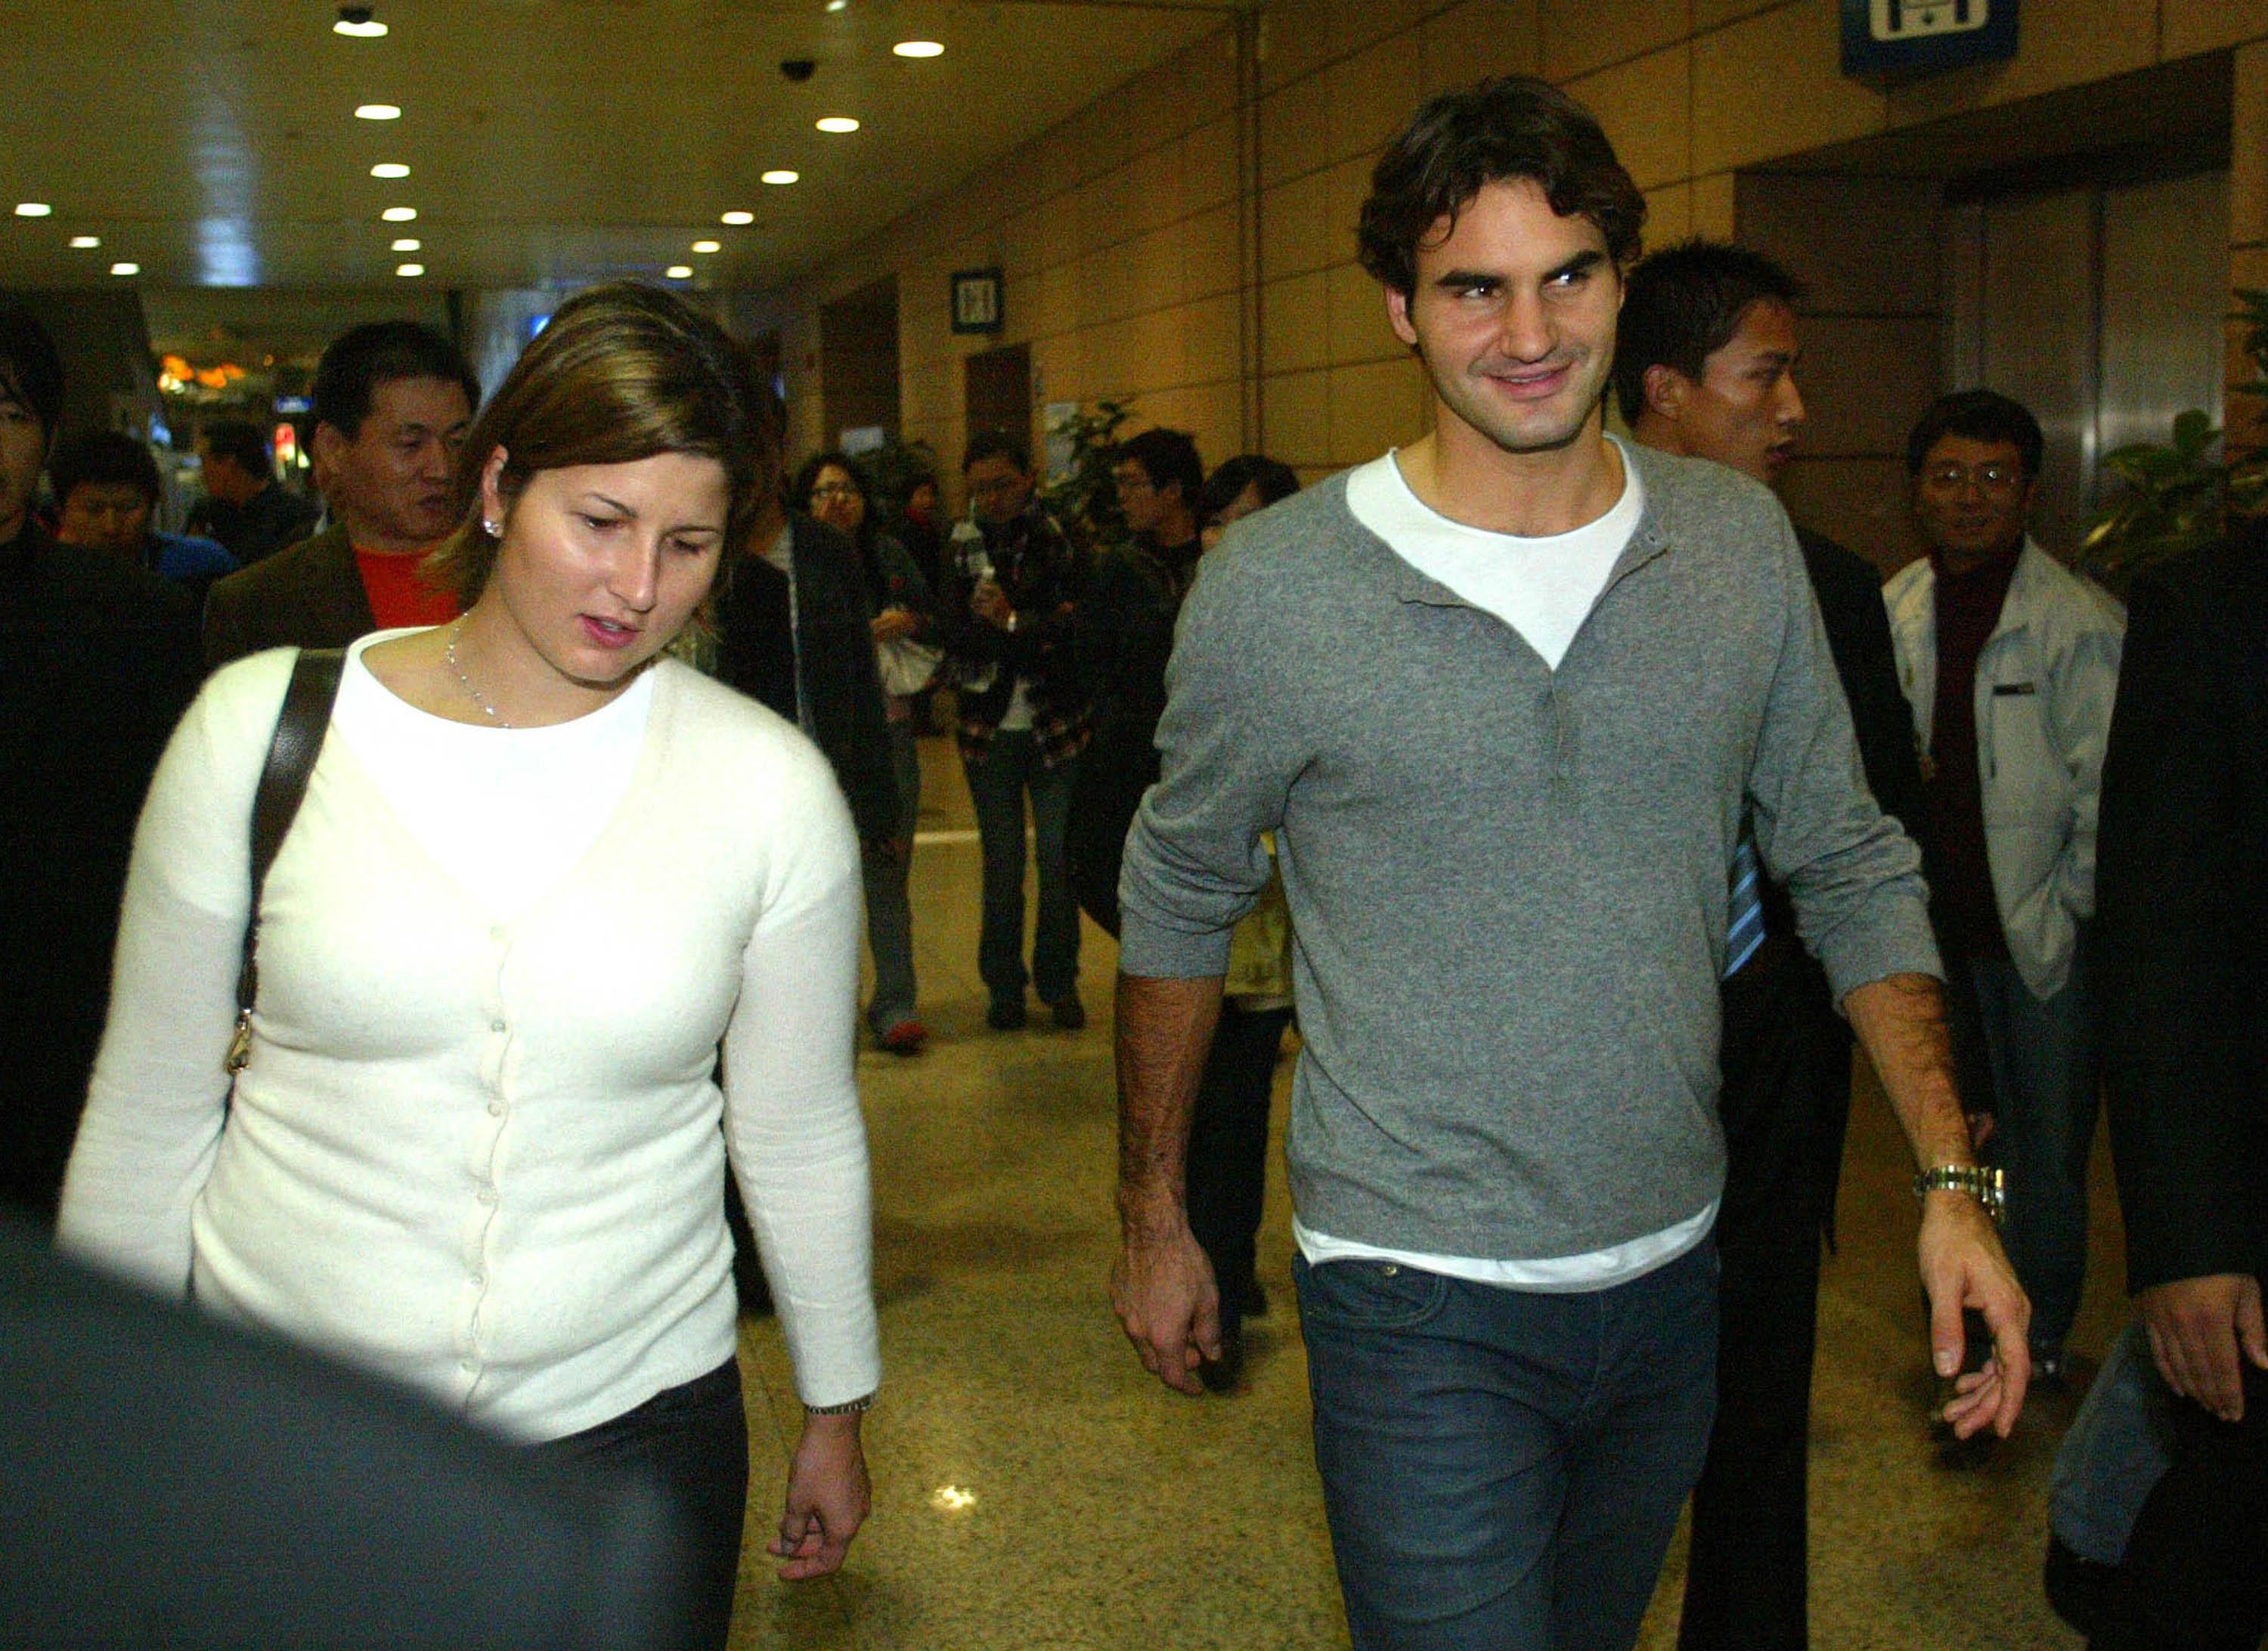 Deuces wild for tennis ace Roger Federer & wife Mirka | New York Gossip Gal | by Roz3000 x 2184